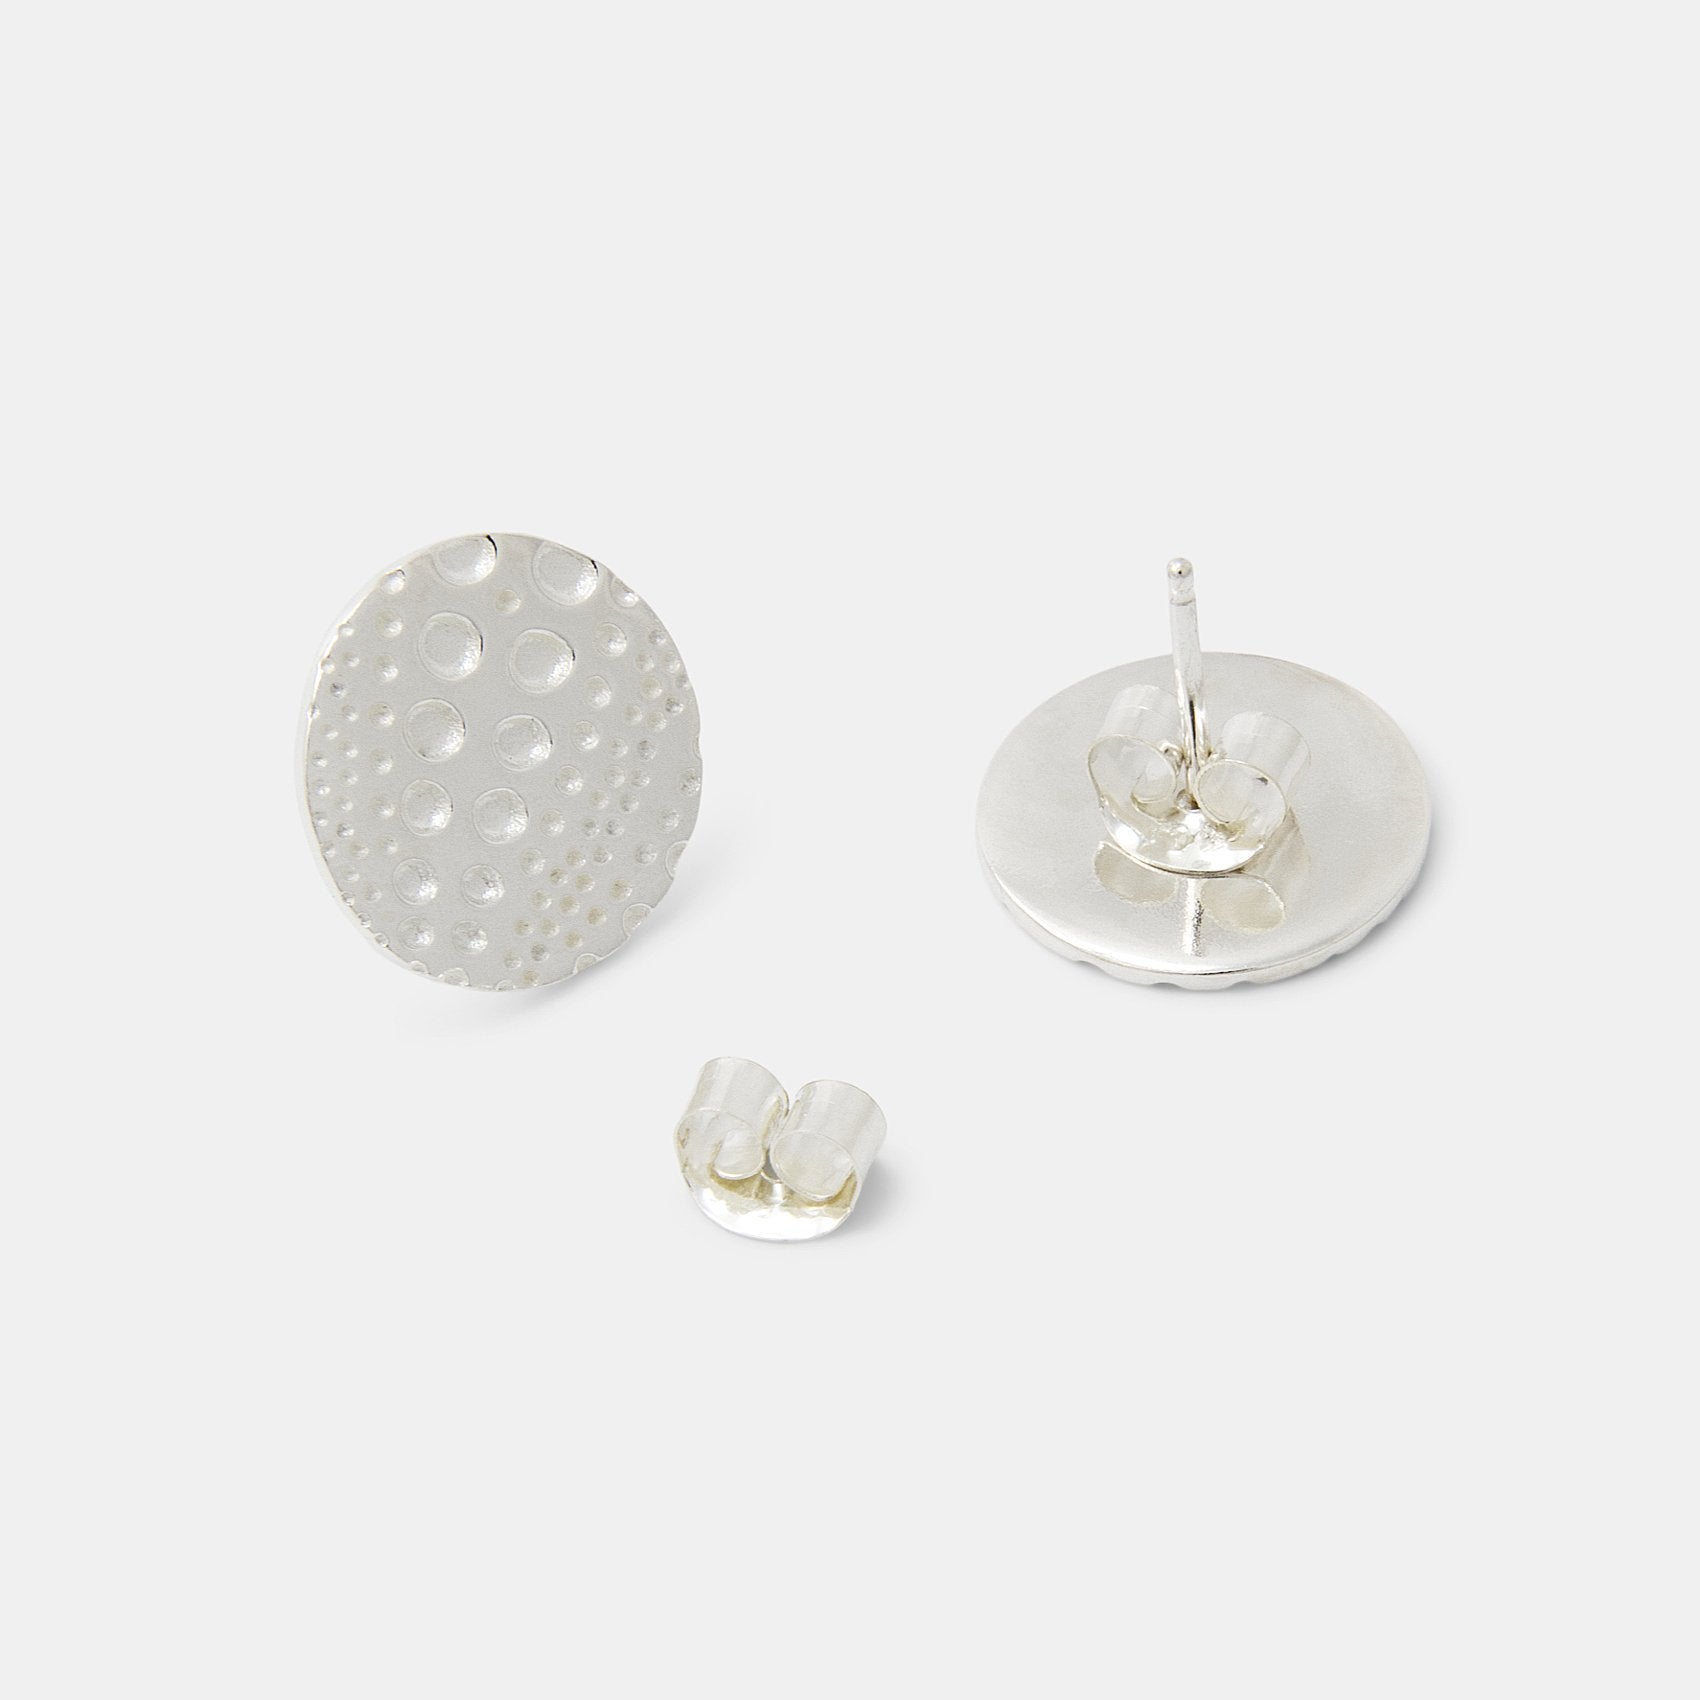 Sea urchin texture silver stud earrings - Simone Walsh Jewellery Australia